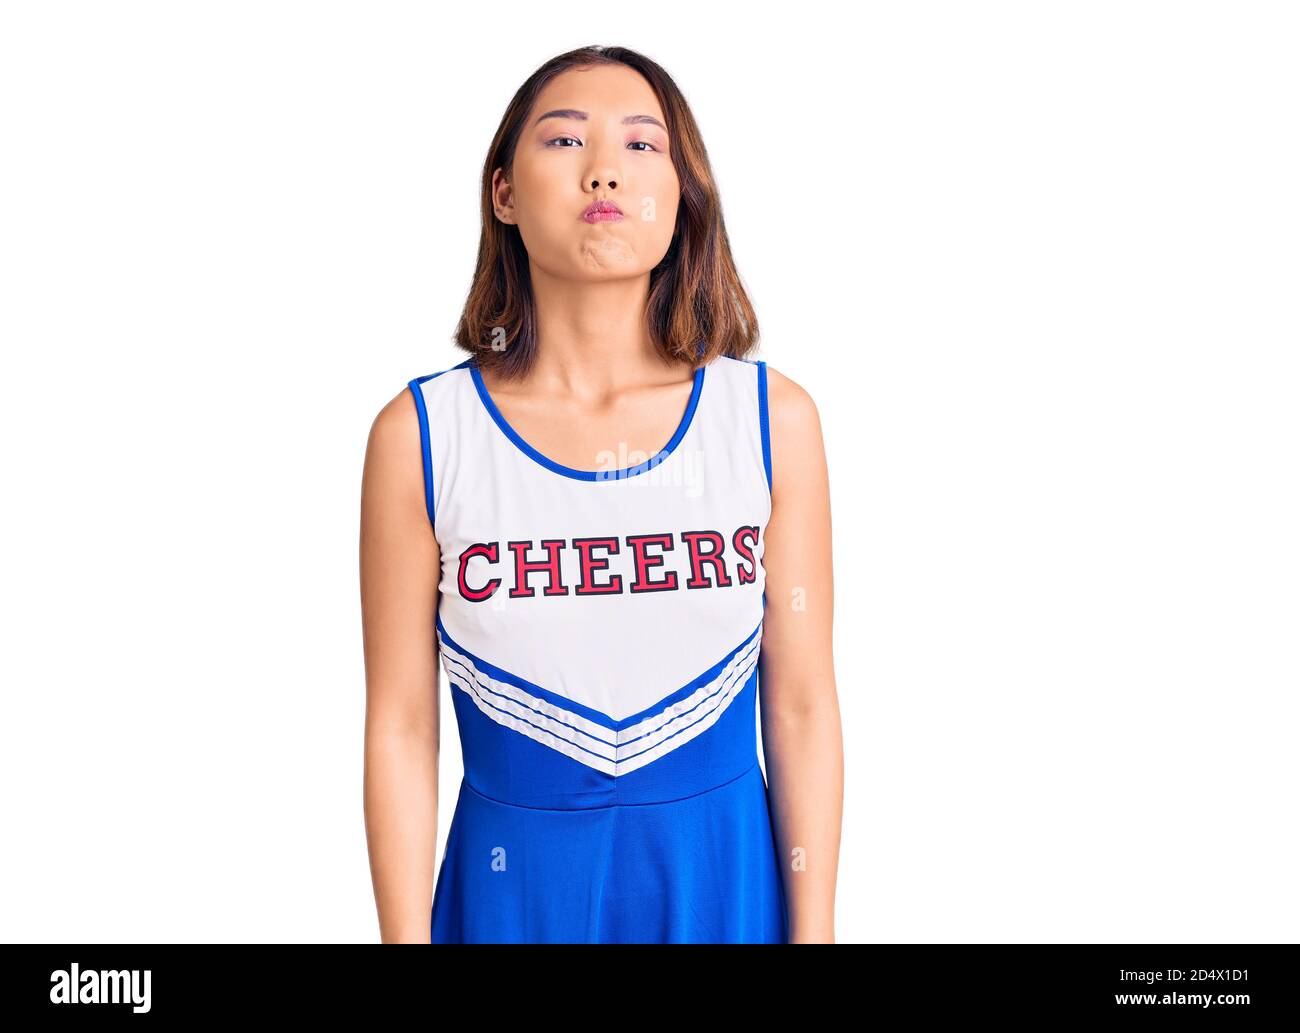 Young Beautiful Chinese Girl Wearing Cheerleader Uniform Puffing Cheeks